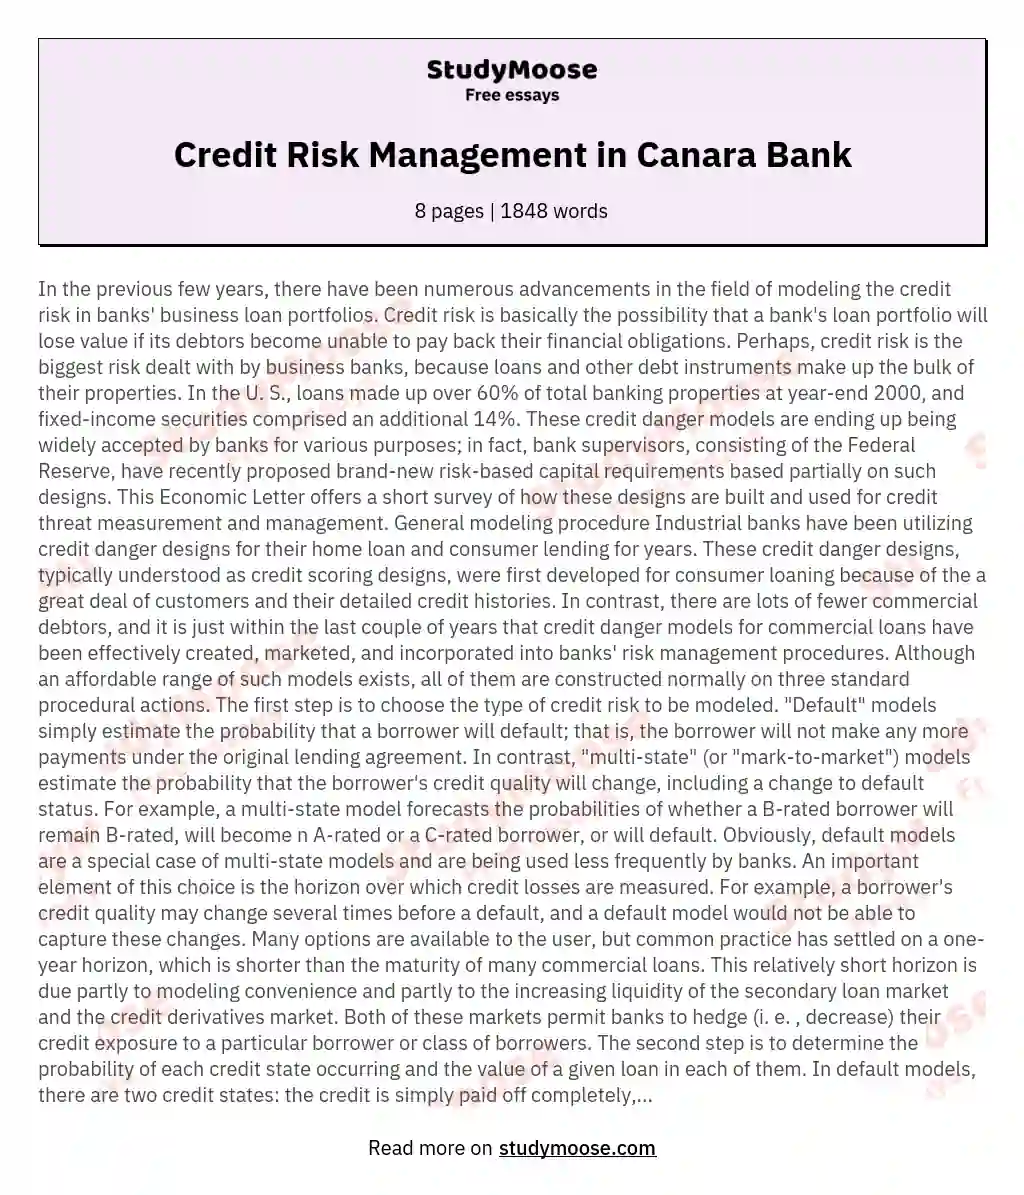 Credit Risk Management in Canara Bank essay